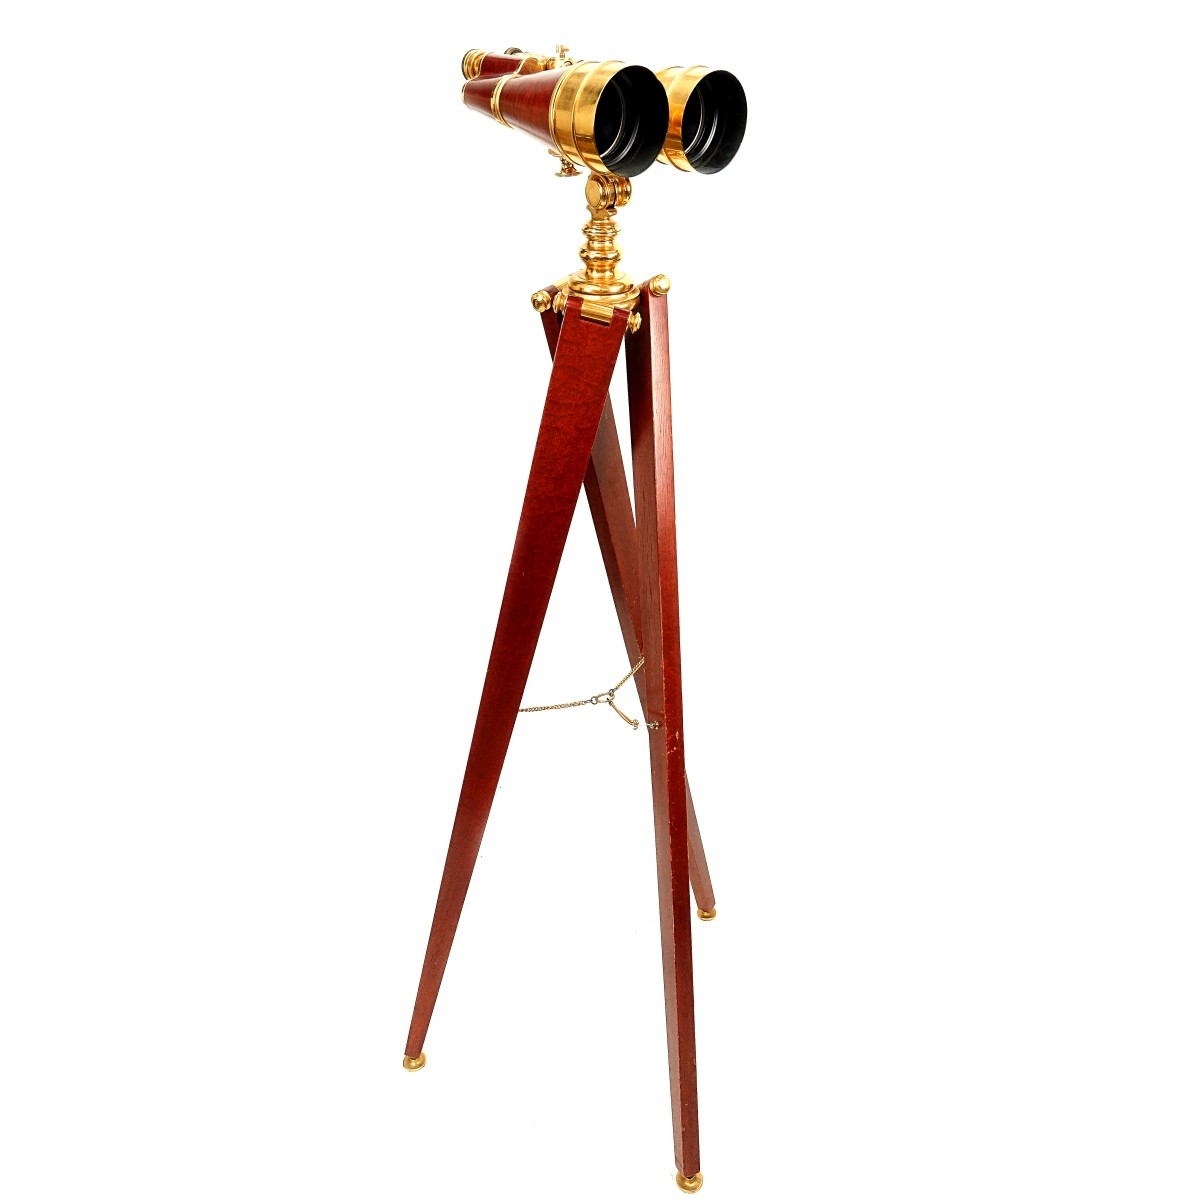 Modern Telescope on Wooden Stand